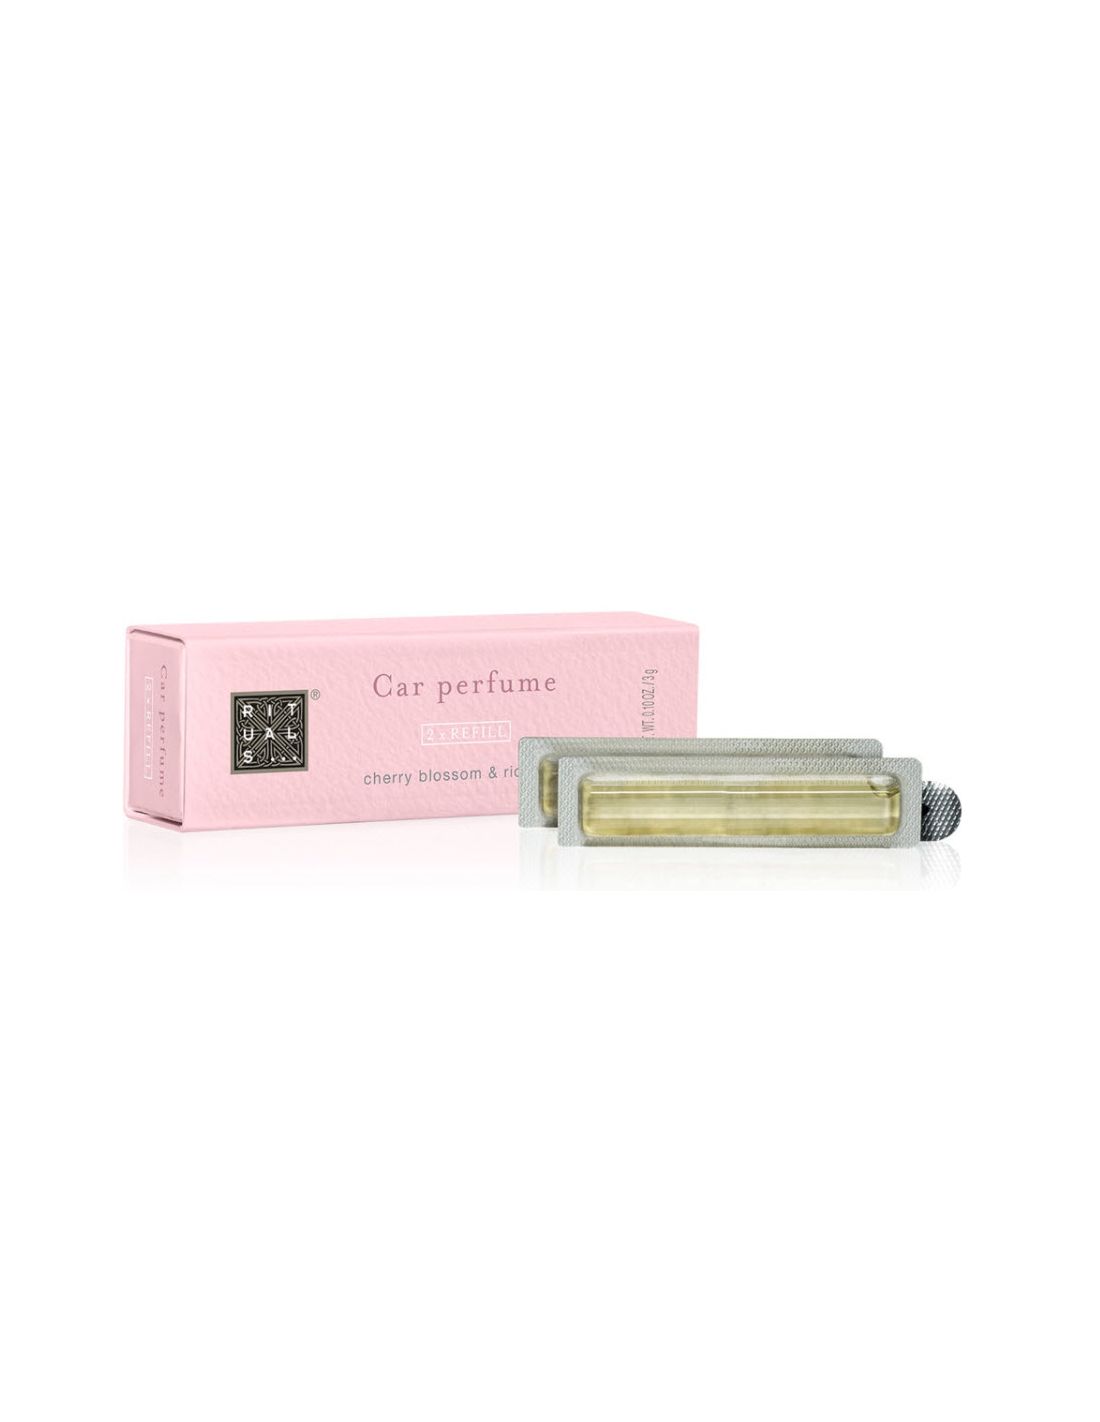 THE RITUAL OF KARMA - Parfum voiture - recharge - RITUALS - Marionnaud